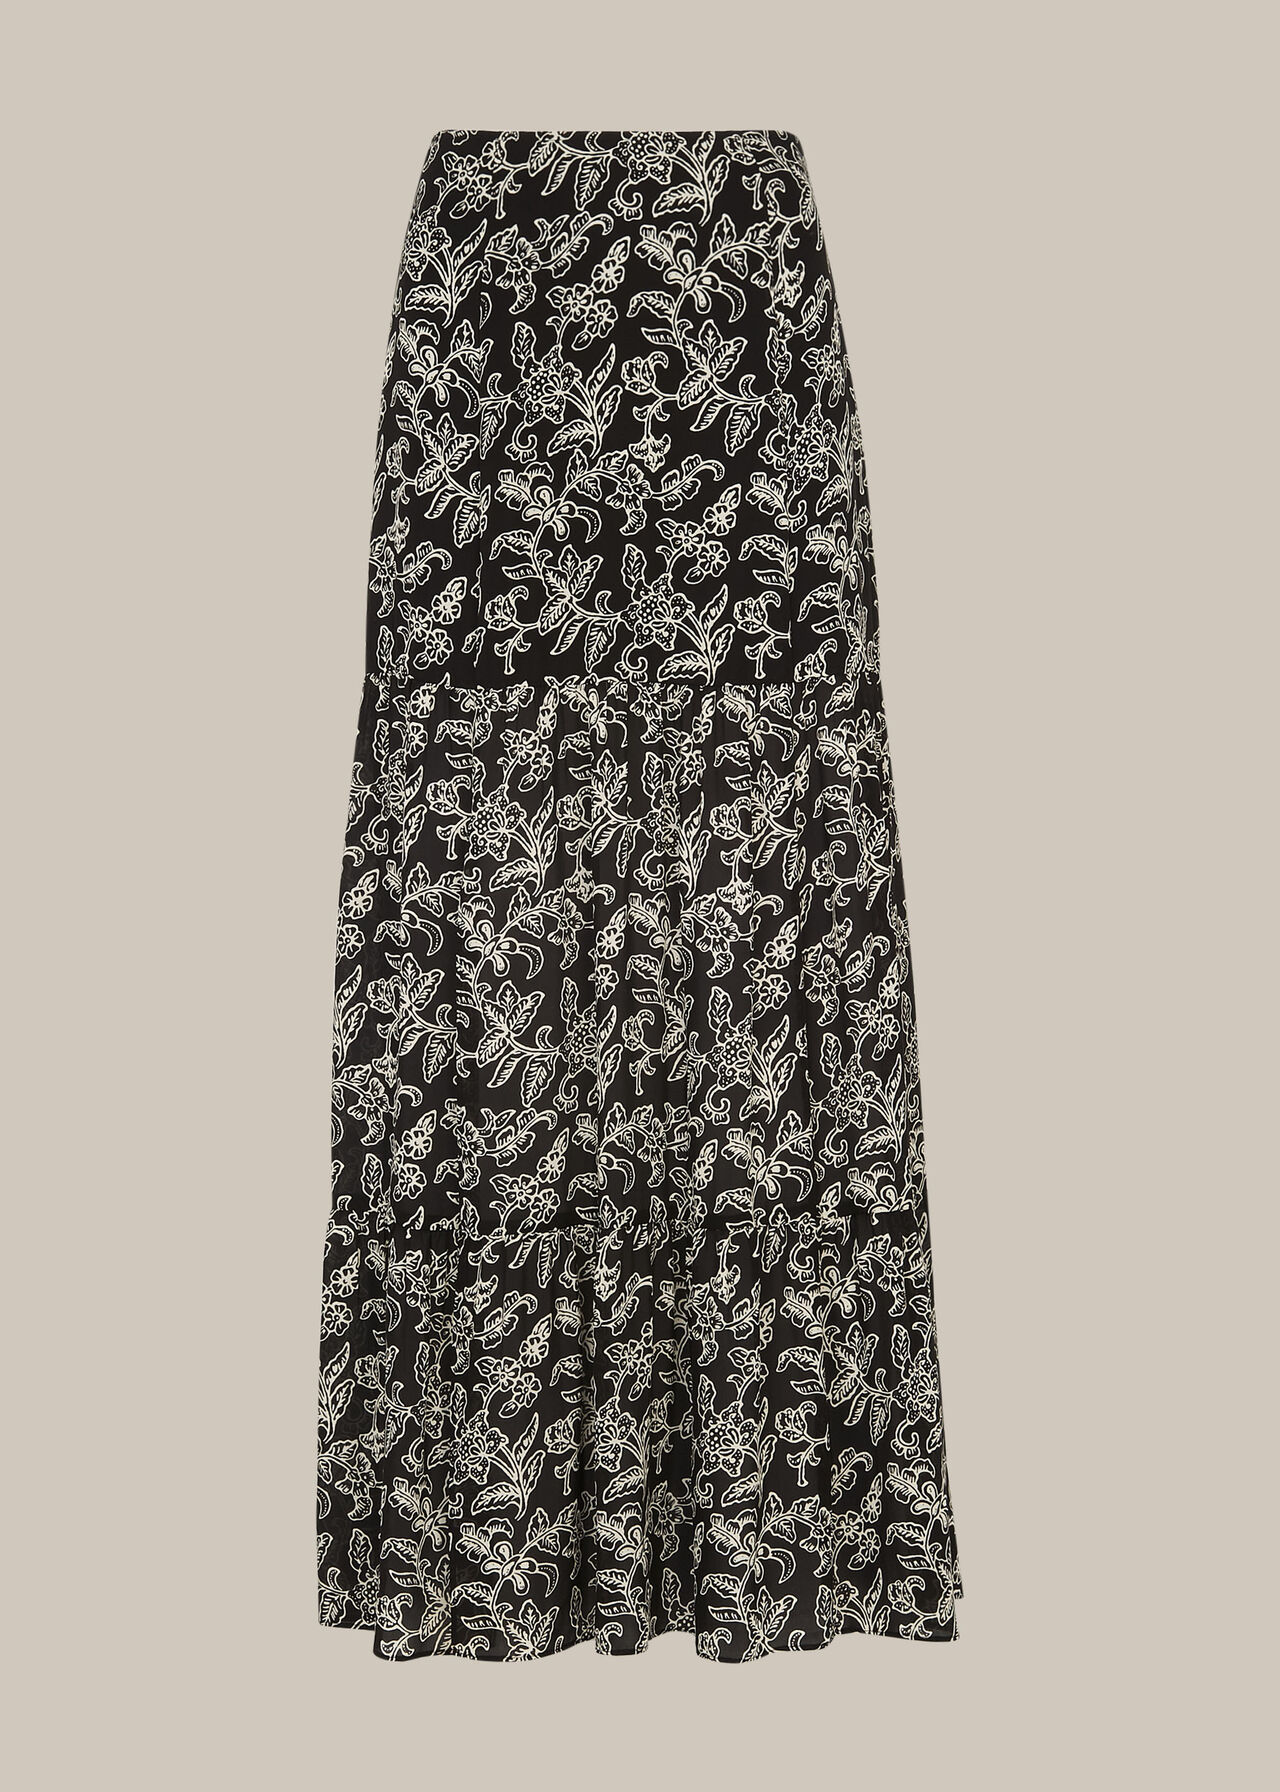 Jasmine Print Silk Skirt Black/Multi